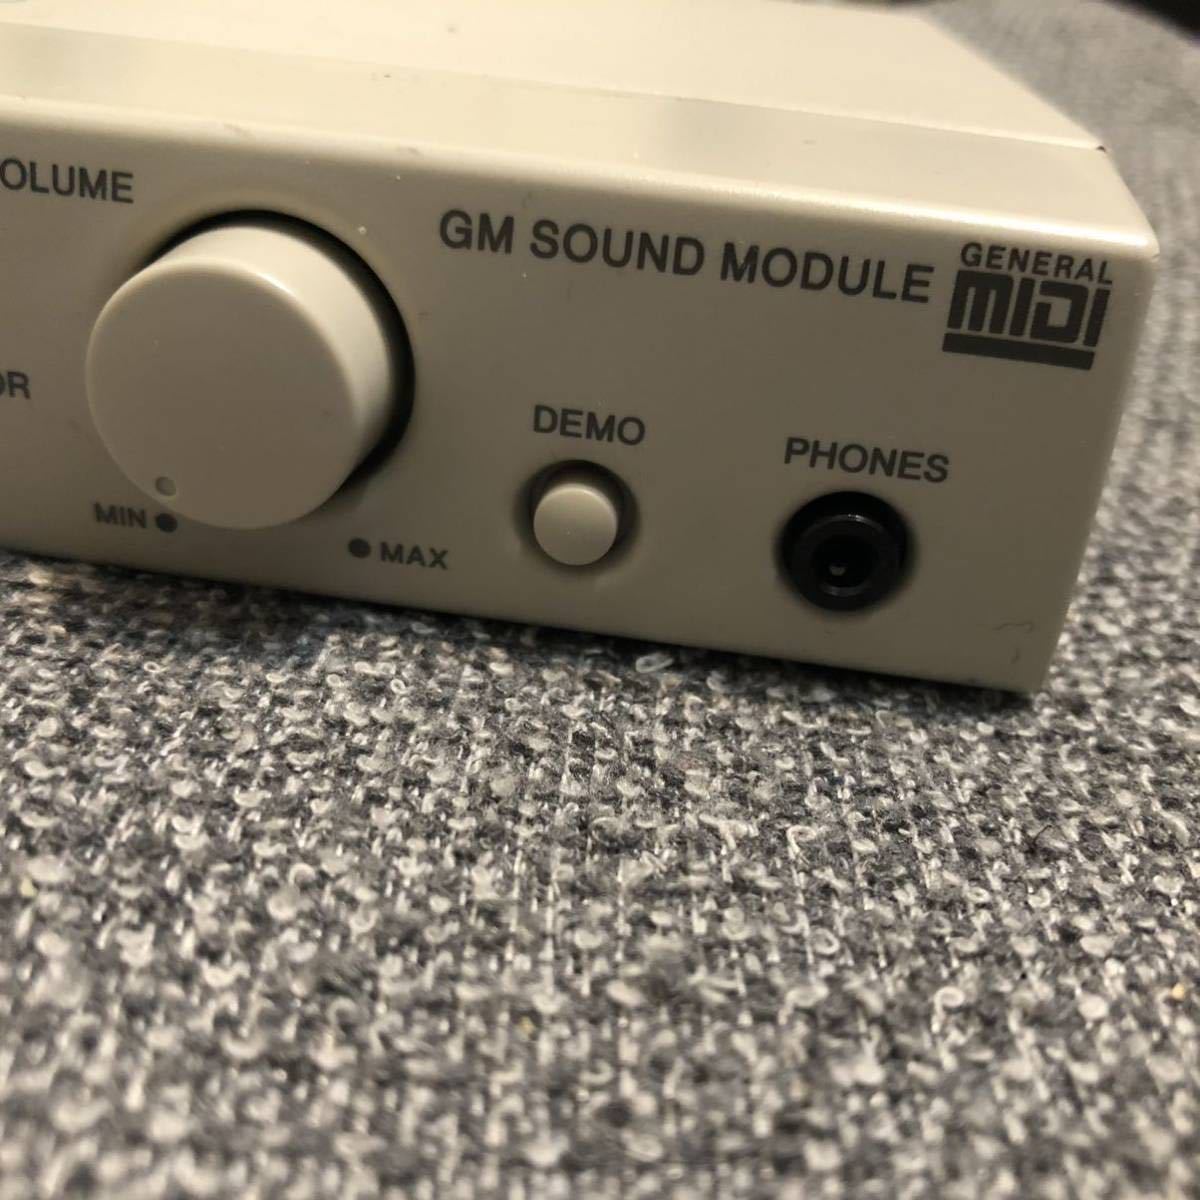 CASIO GM SOUND MODULE GZ-50M 音源モジュール カシオ_画像4